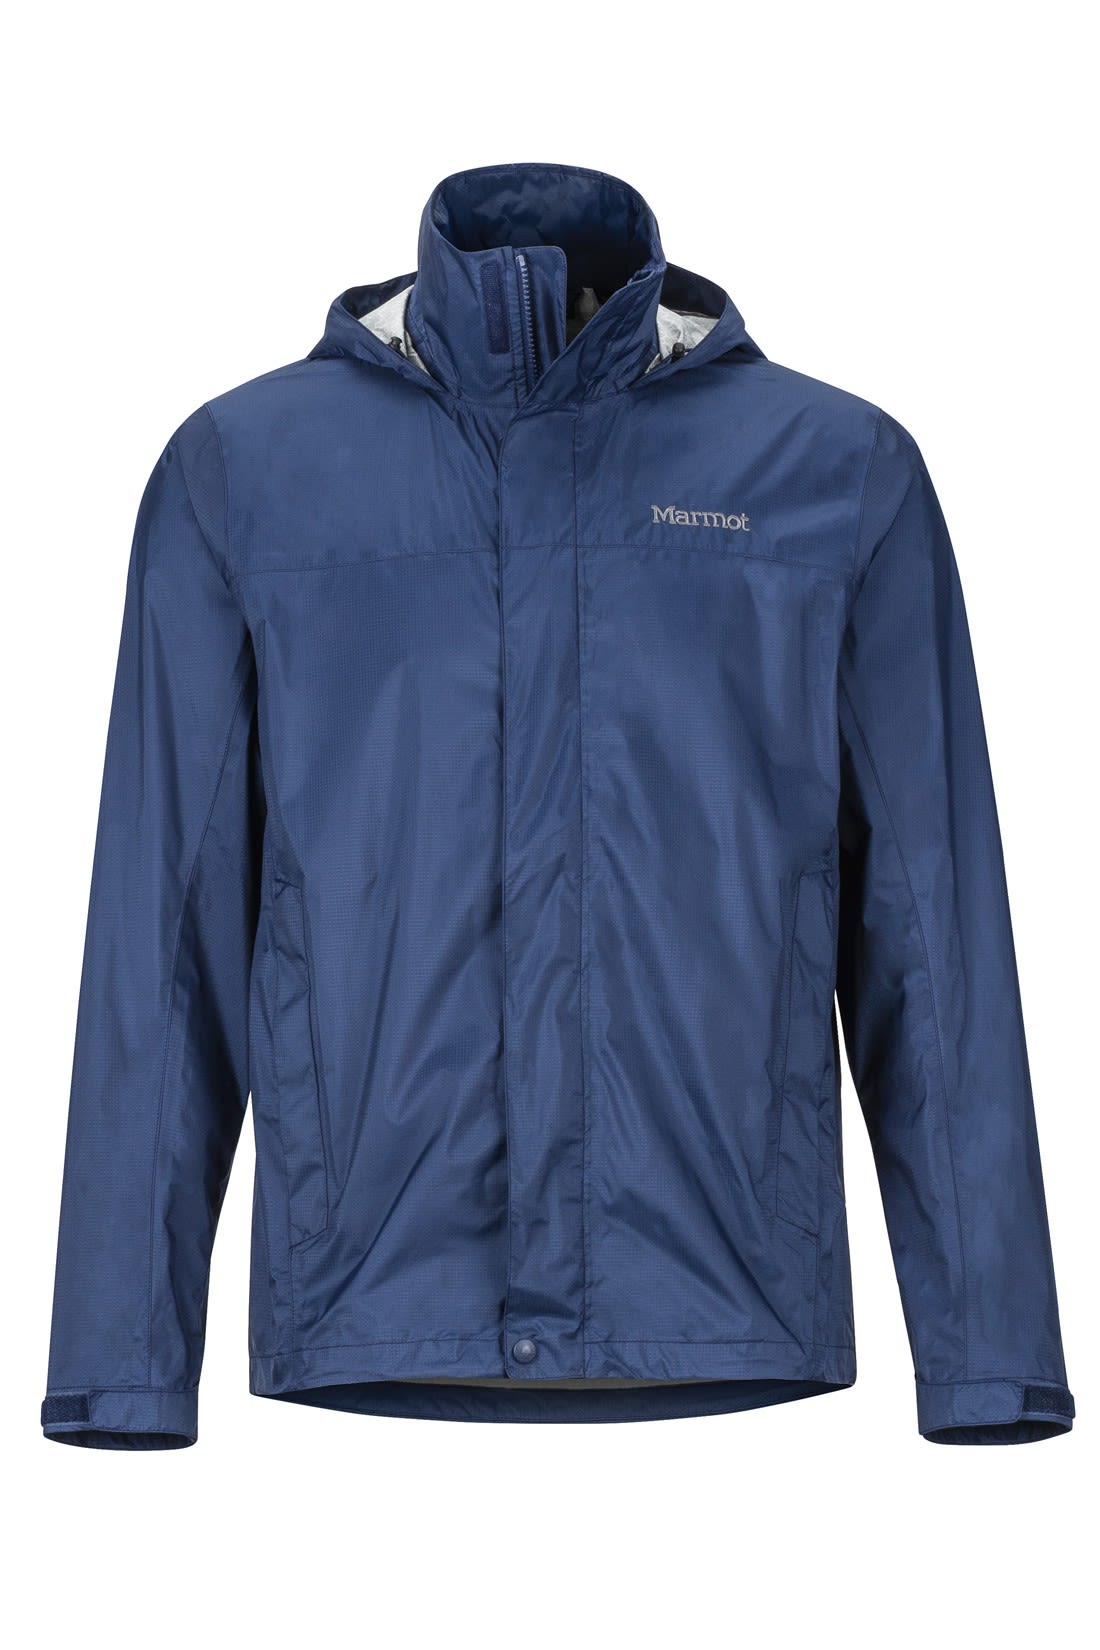 Marmot Precip ECO Jacket Blau- Male Ponchos und Capes- Grsse S - Farbe Arctic Navy